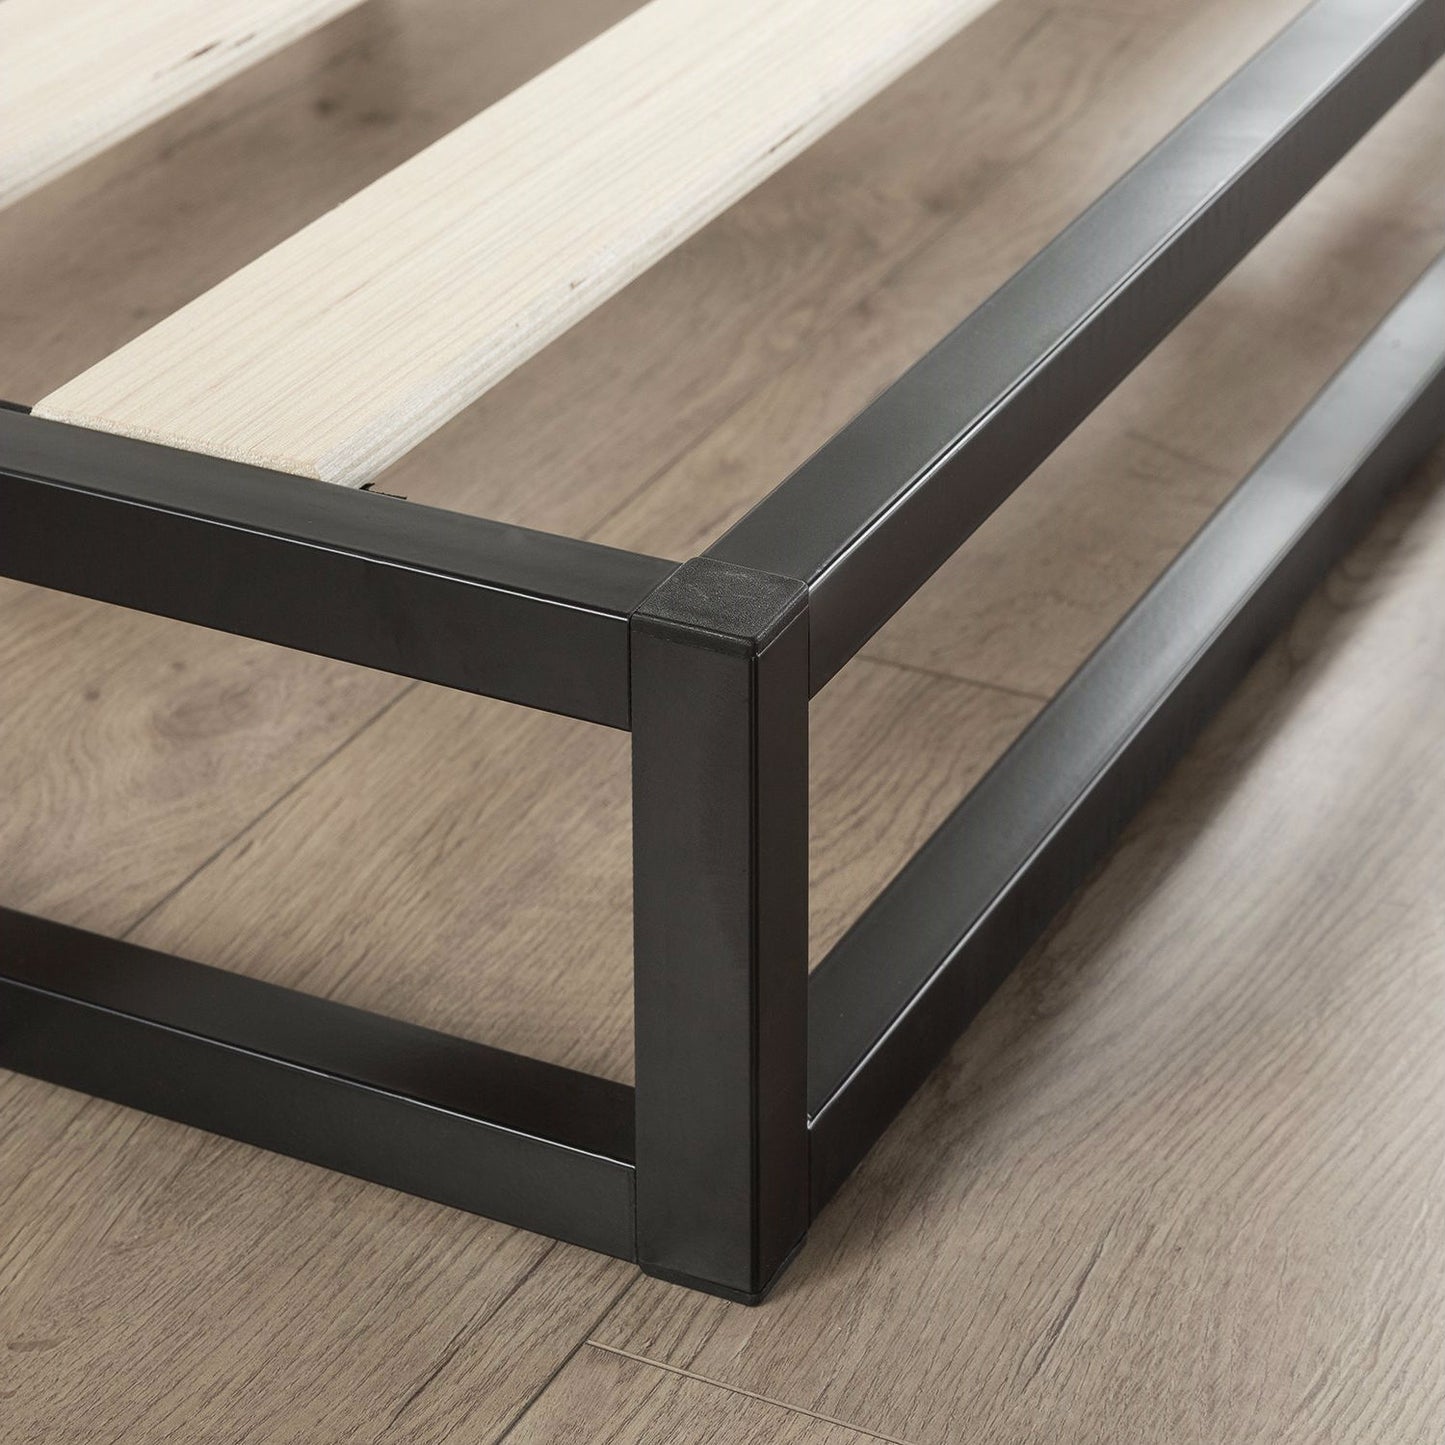 King 6-inch Low Profile Metal Platform Bed Frame with Wooden Support Slats